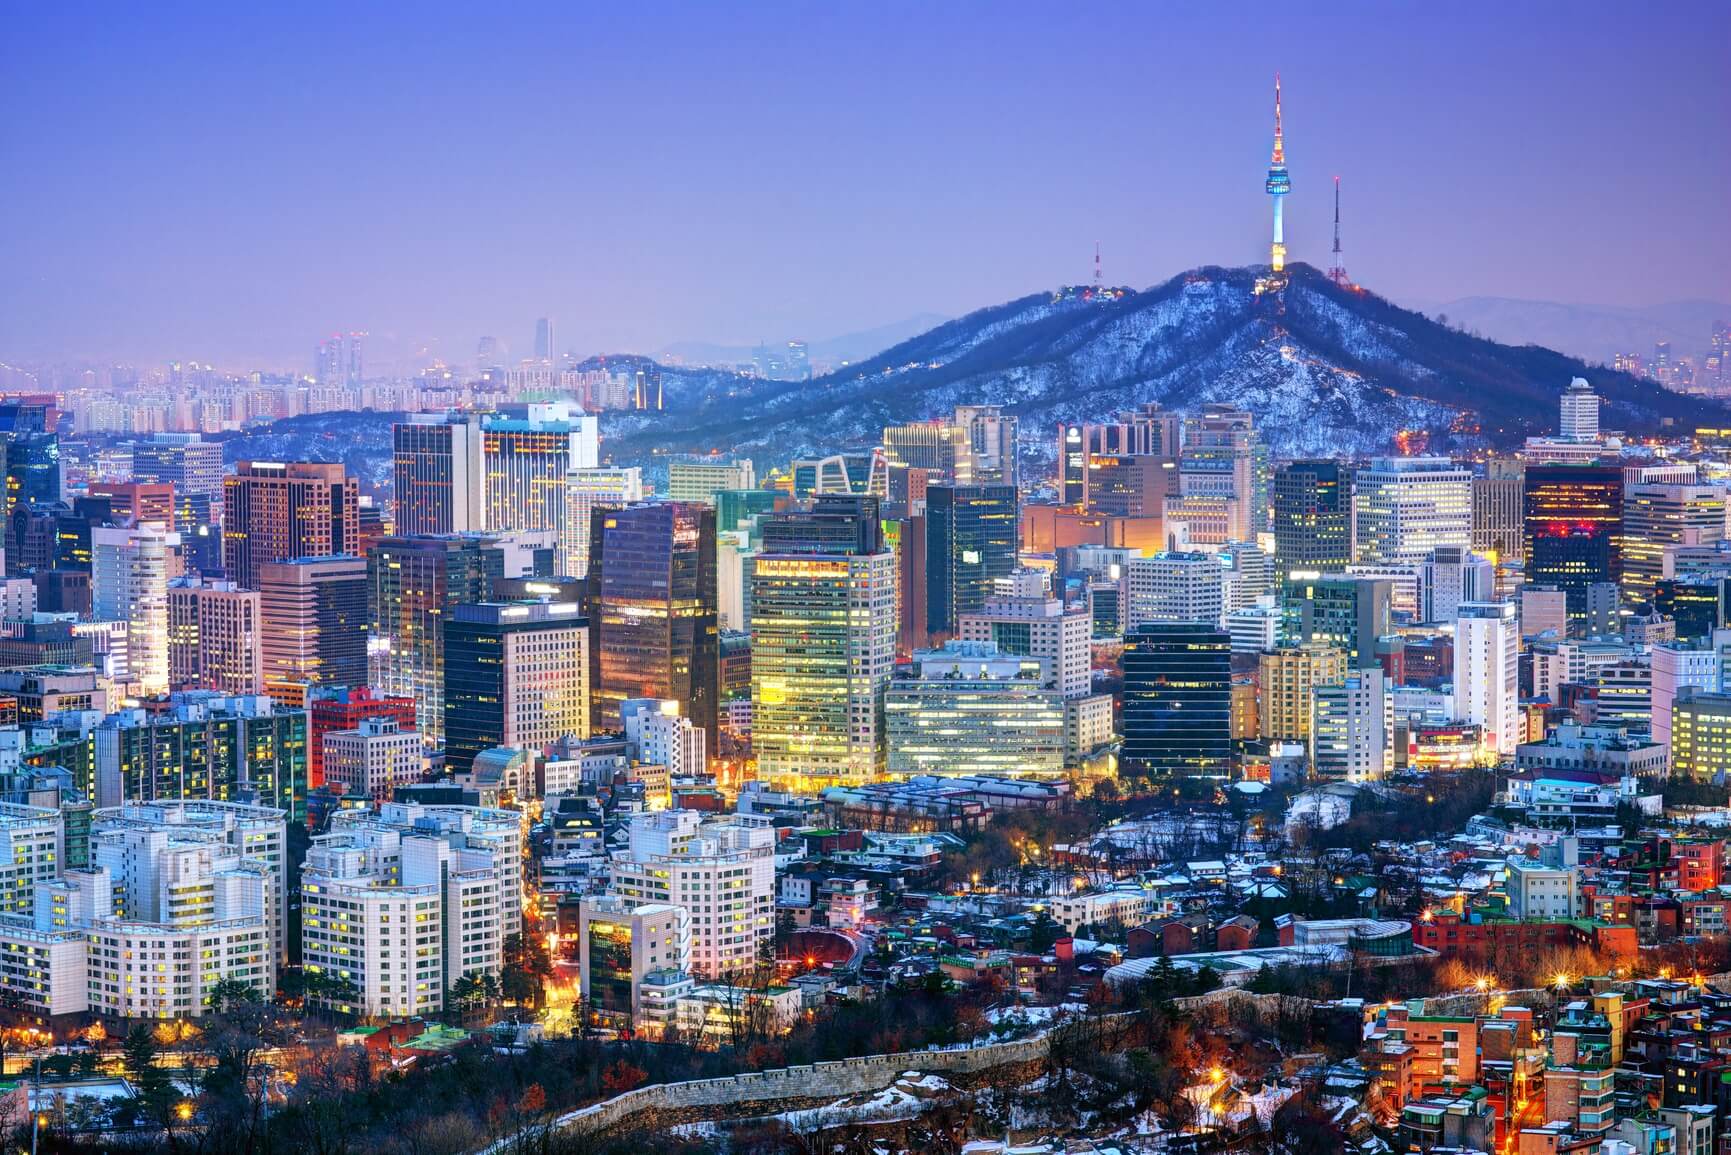 Flight deals from Vienna, Austria to Seoul, South Korea | Secret Flying